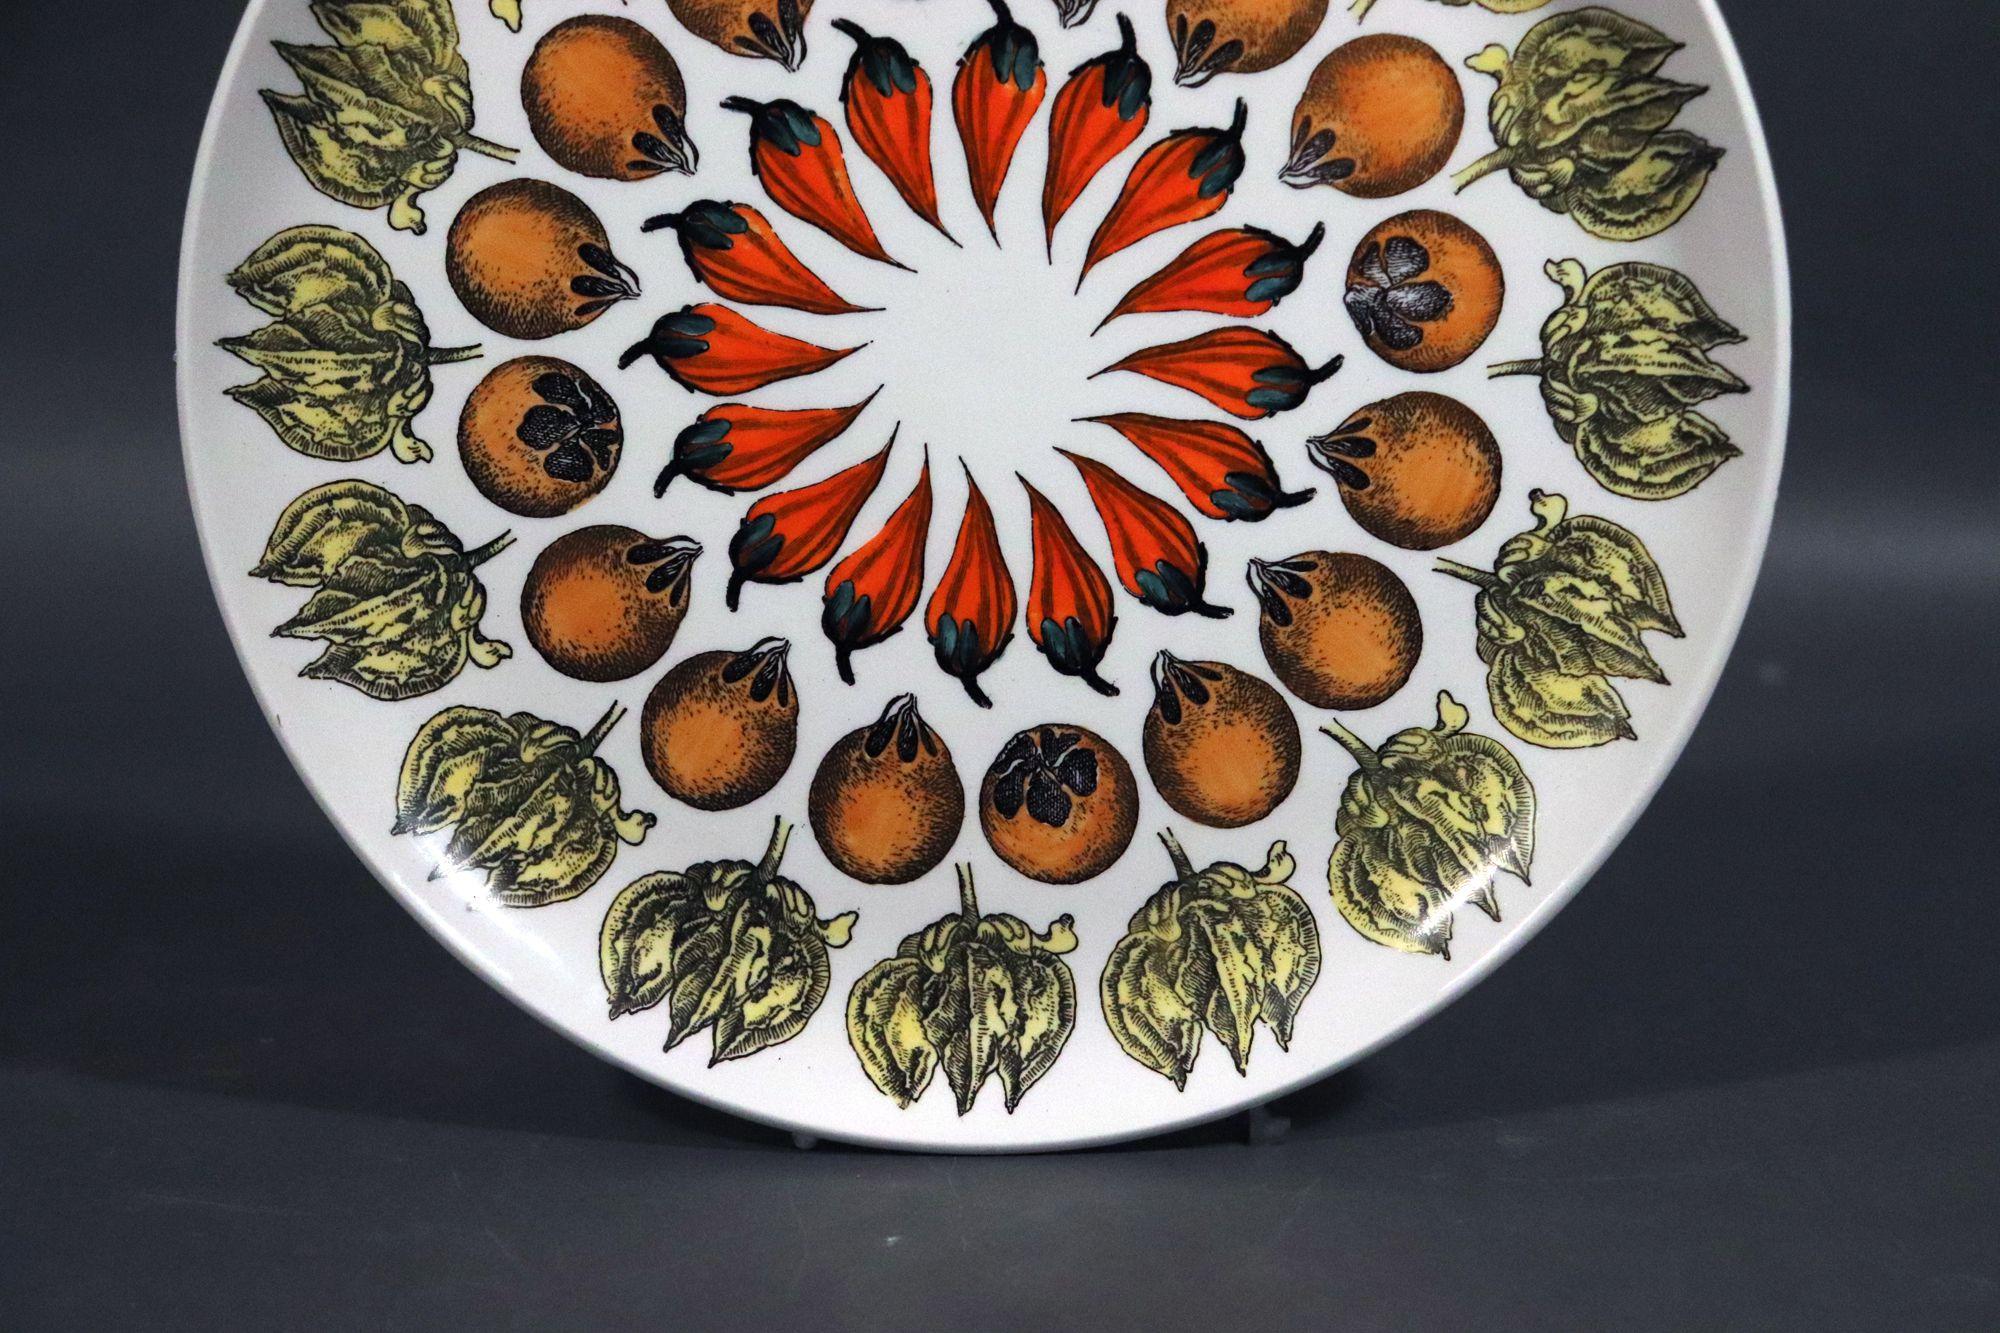 Piero Fornasetti Porcelain Plates, Giostra di Frutta (Merry-go-Round of Fruit) For Sale 9